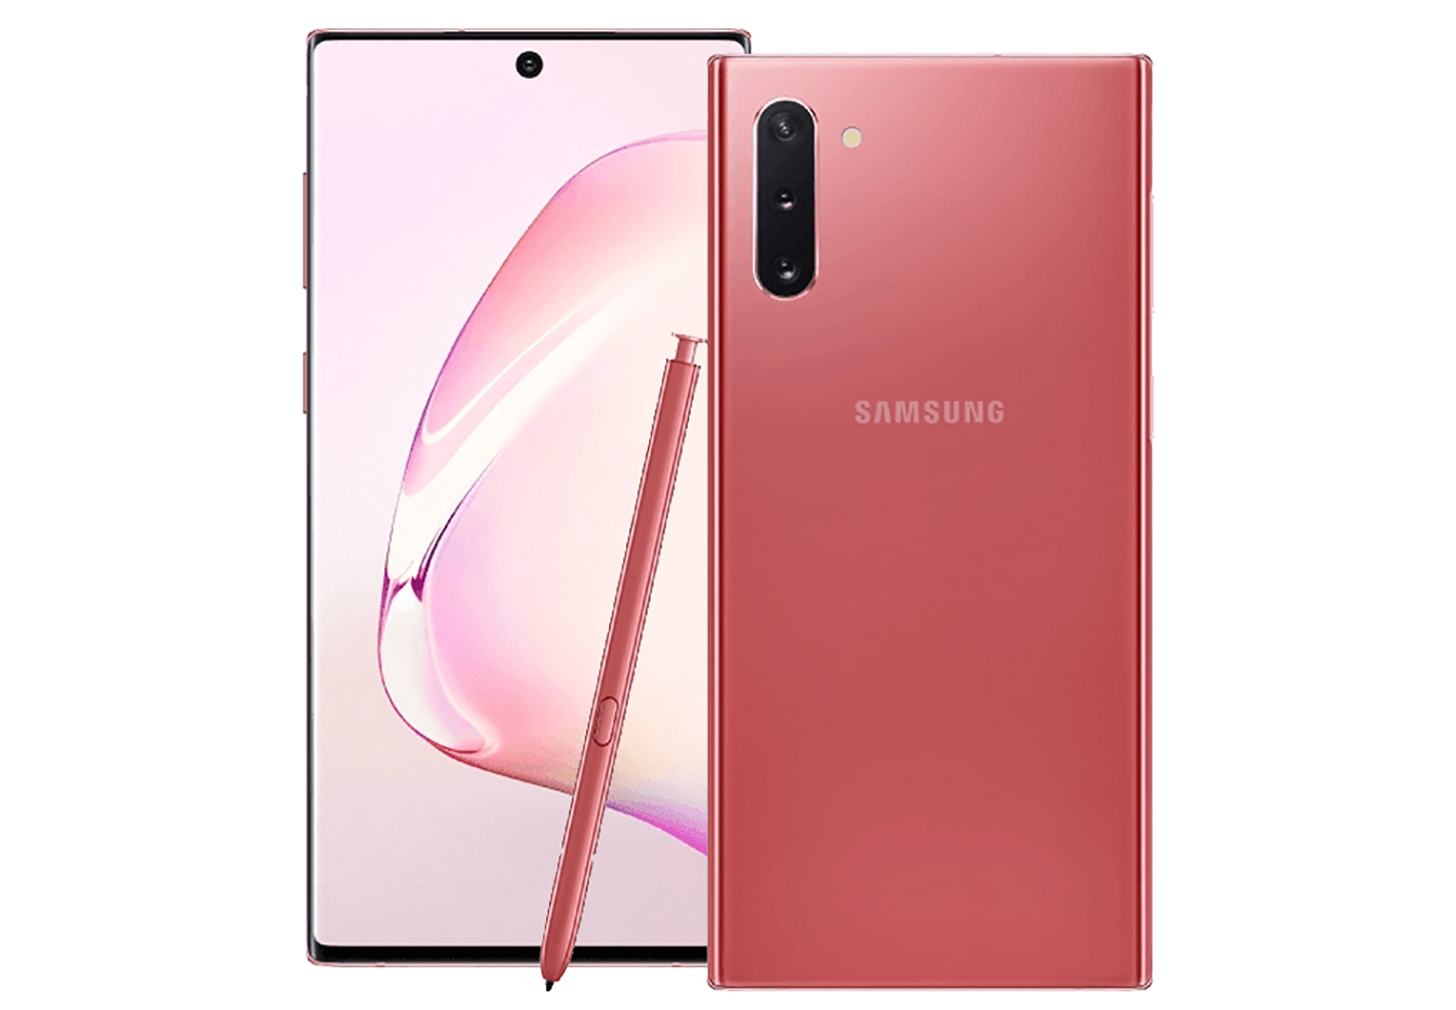 Samsung Galaxy Note 10 bocor lagi, kali ini berwarna pink